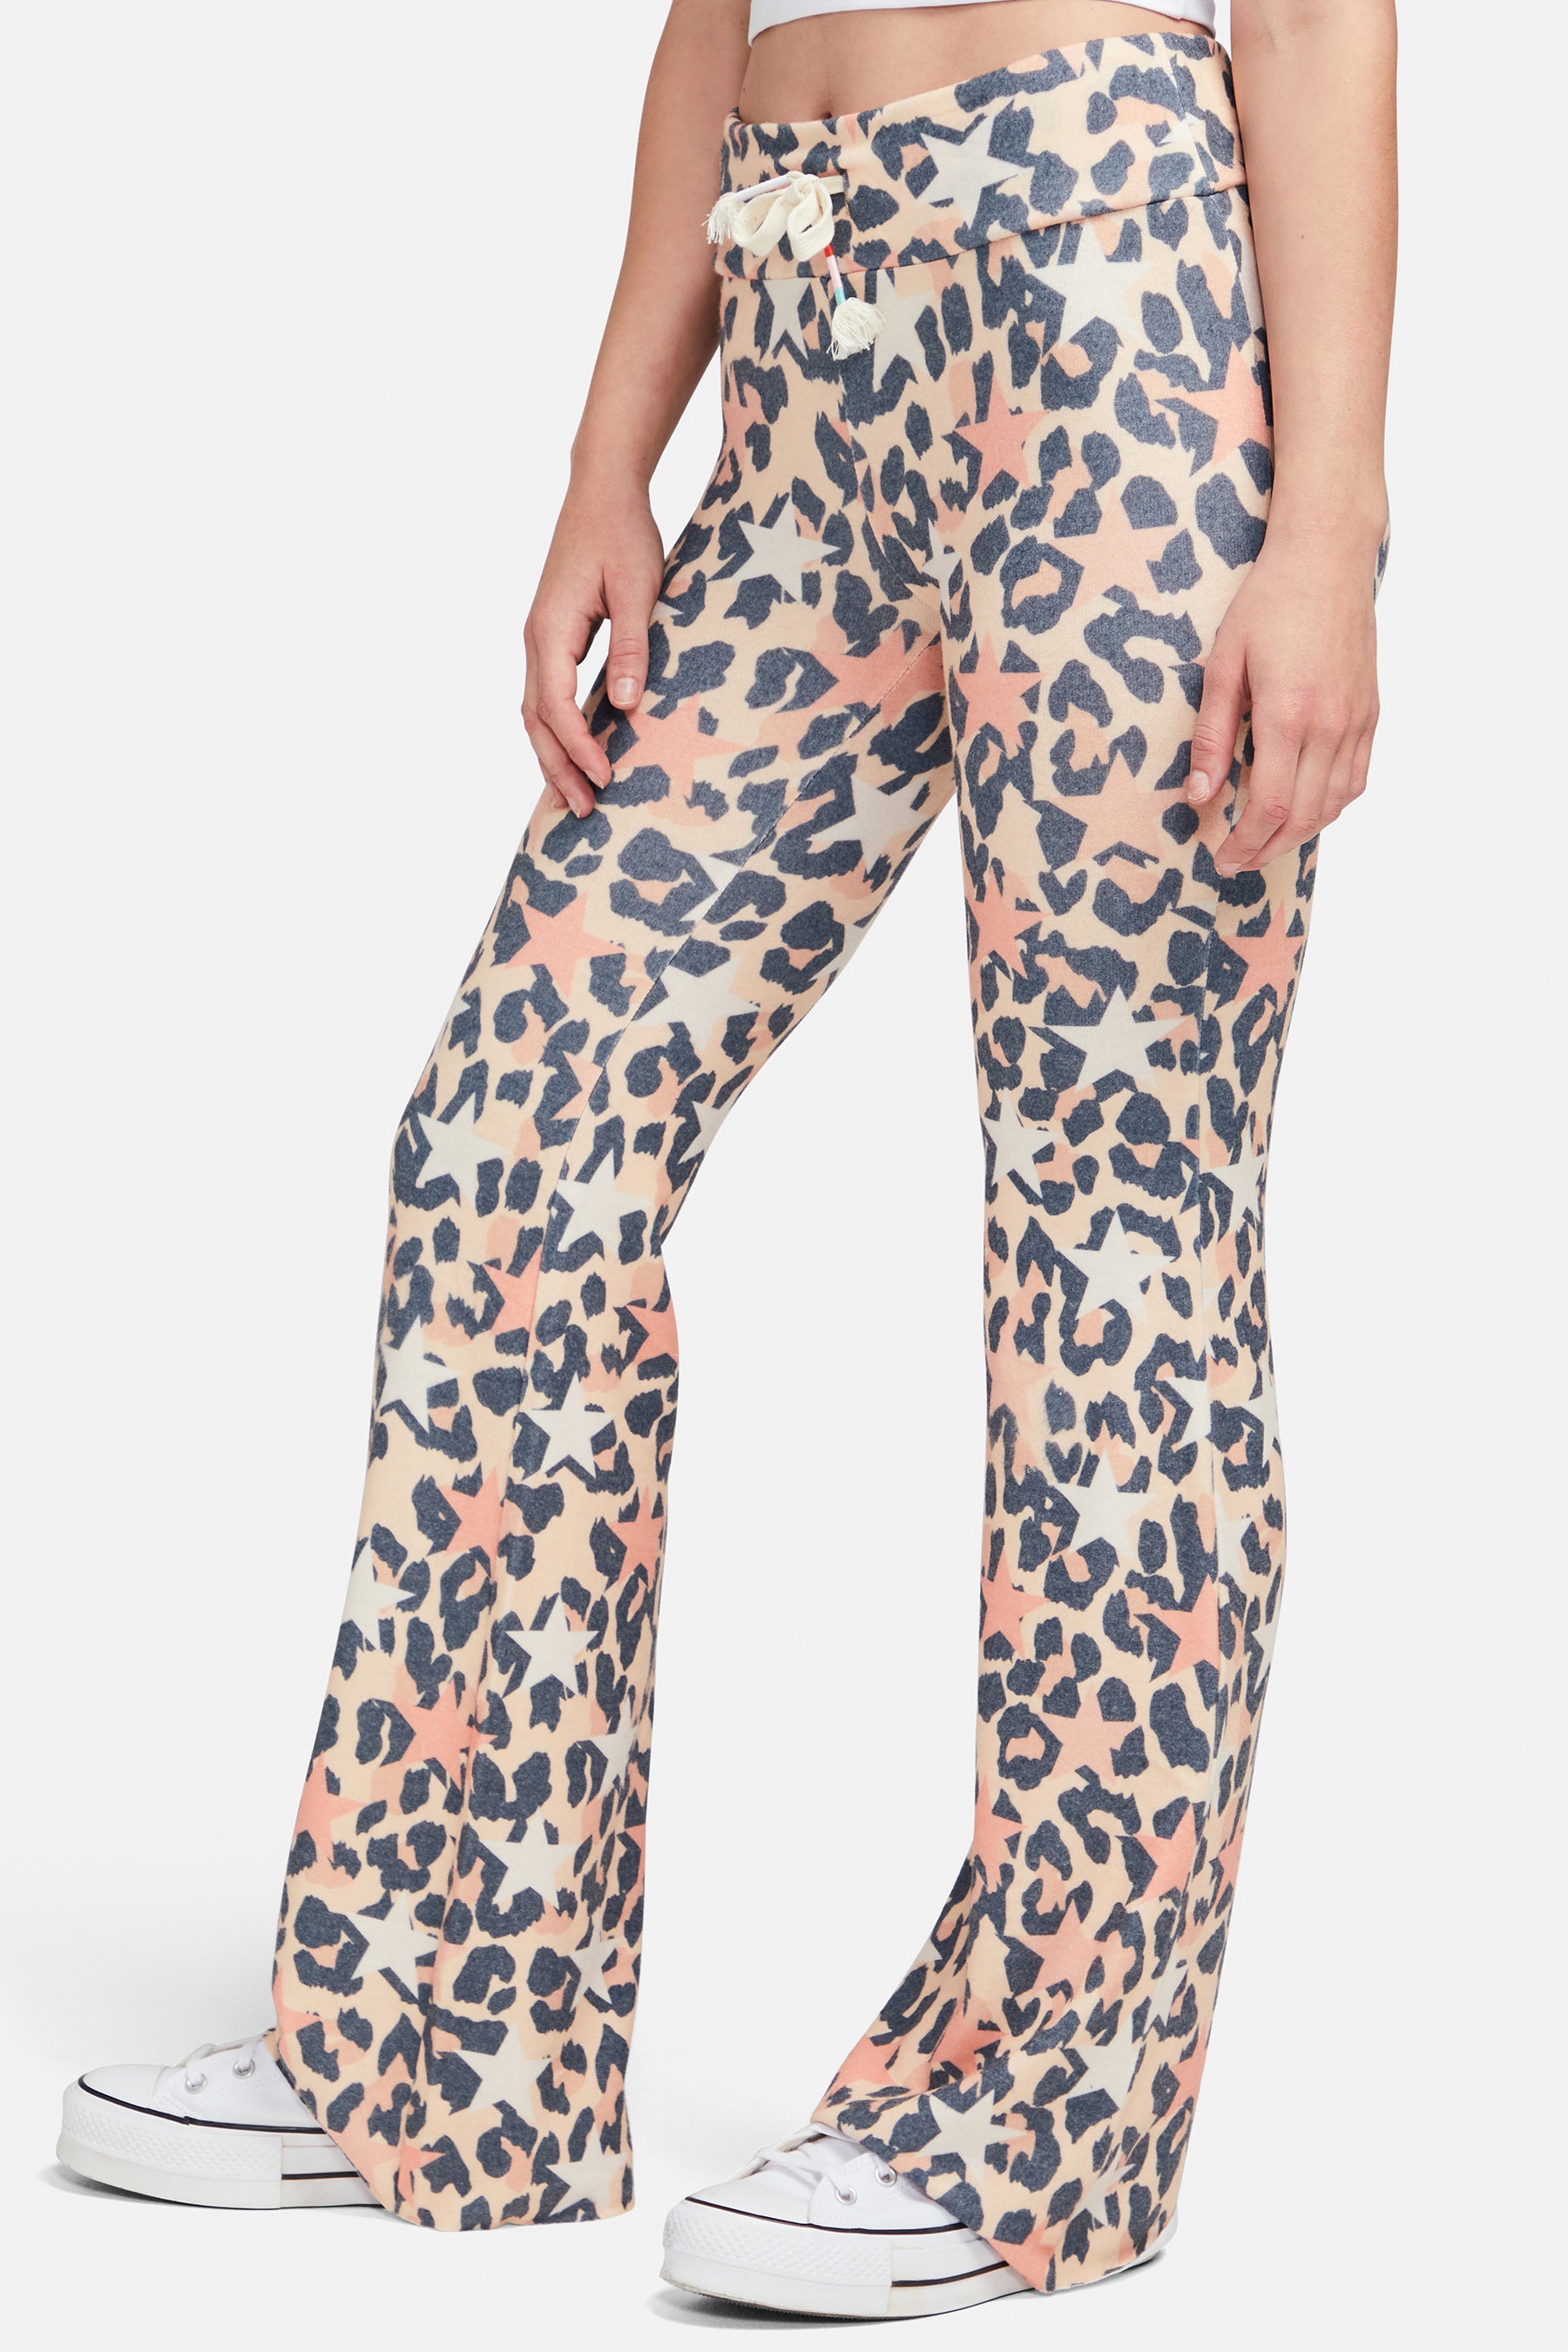 Pants (Berska, similar here and also love this pair)